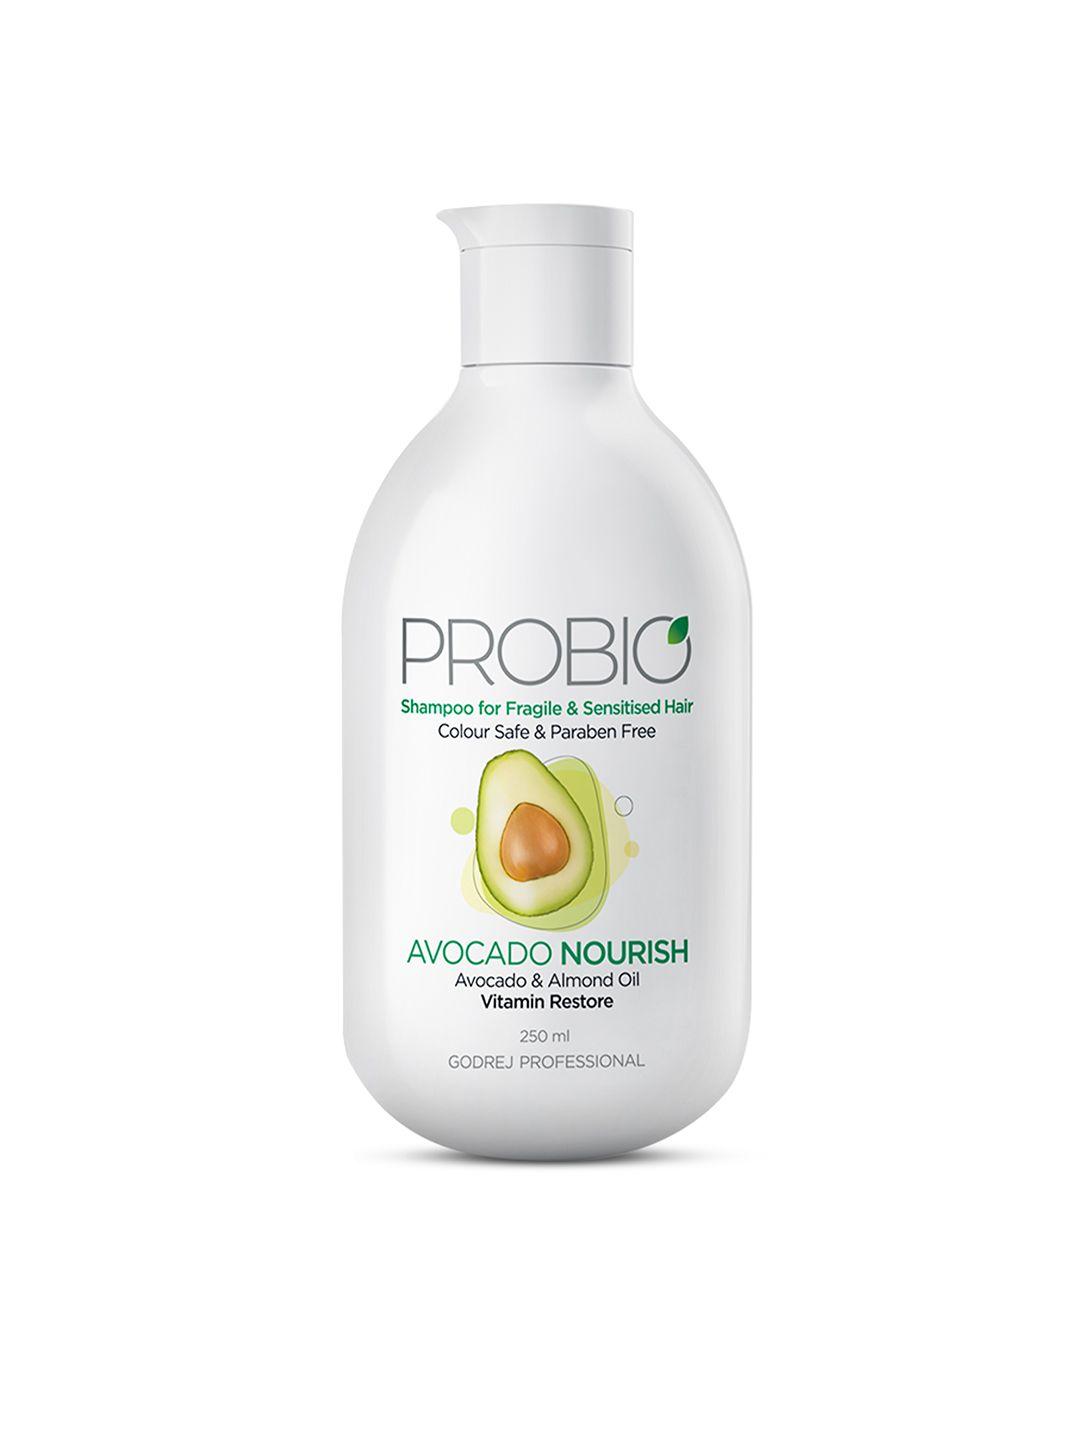 godrej professional probio avocado nourish shampoo for fragile & sensitised hair - 250 ml